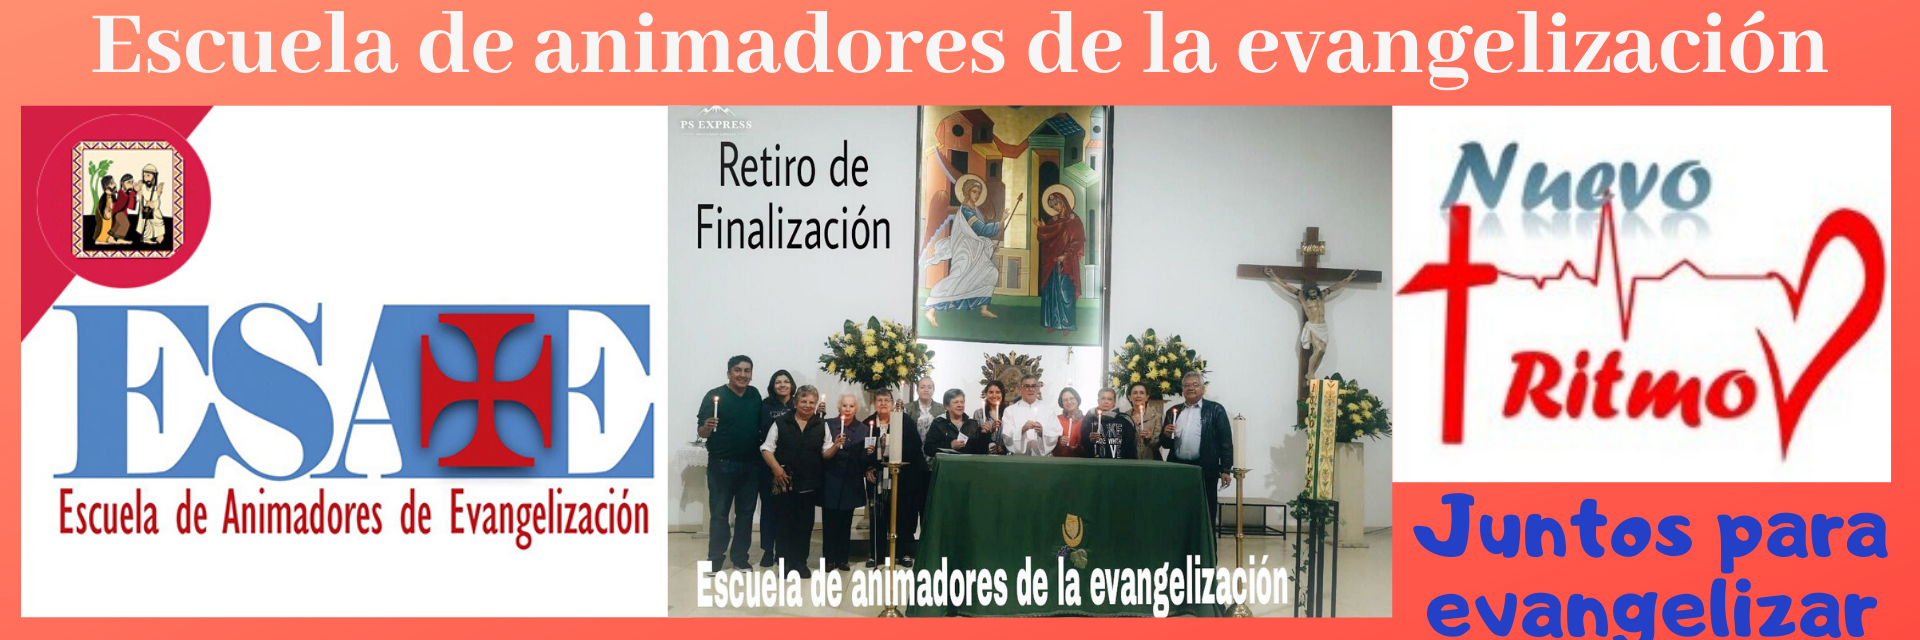 https://arquimedia.s3.amazonaws.com/85/plan-de-evangelizacion-historia/escuelapng.png